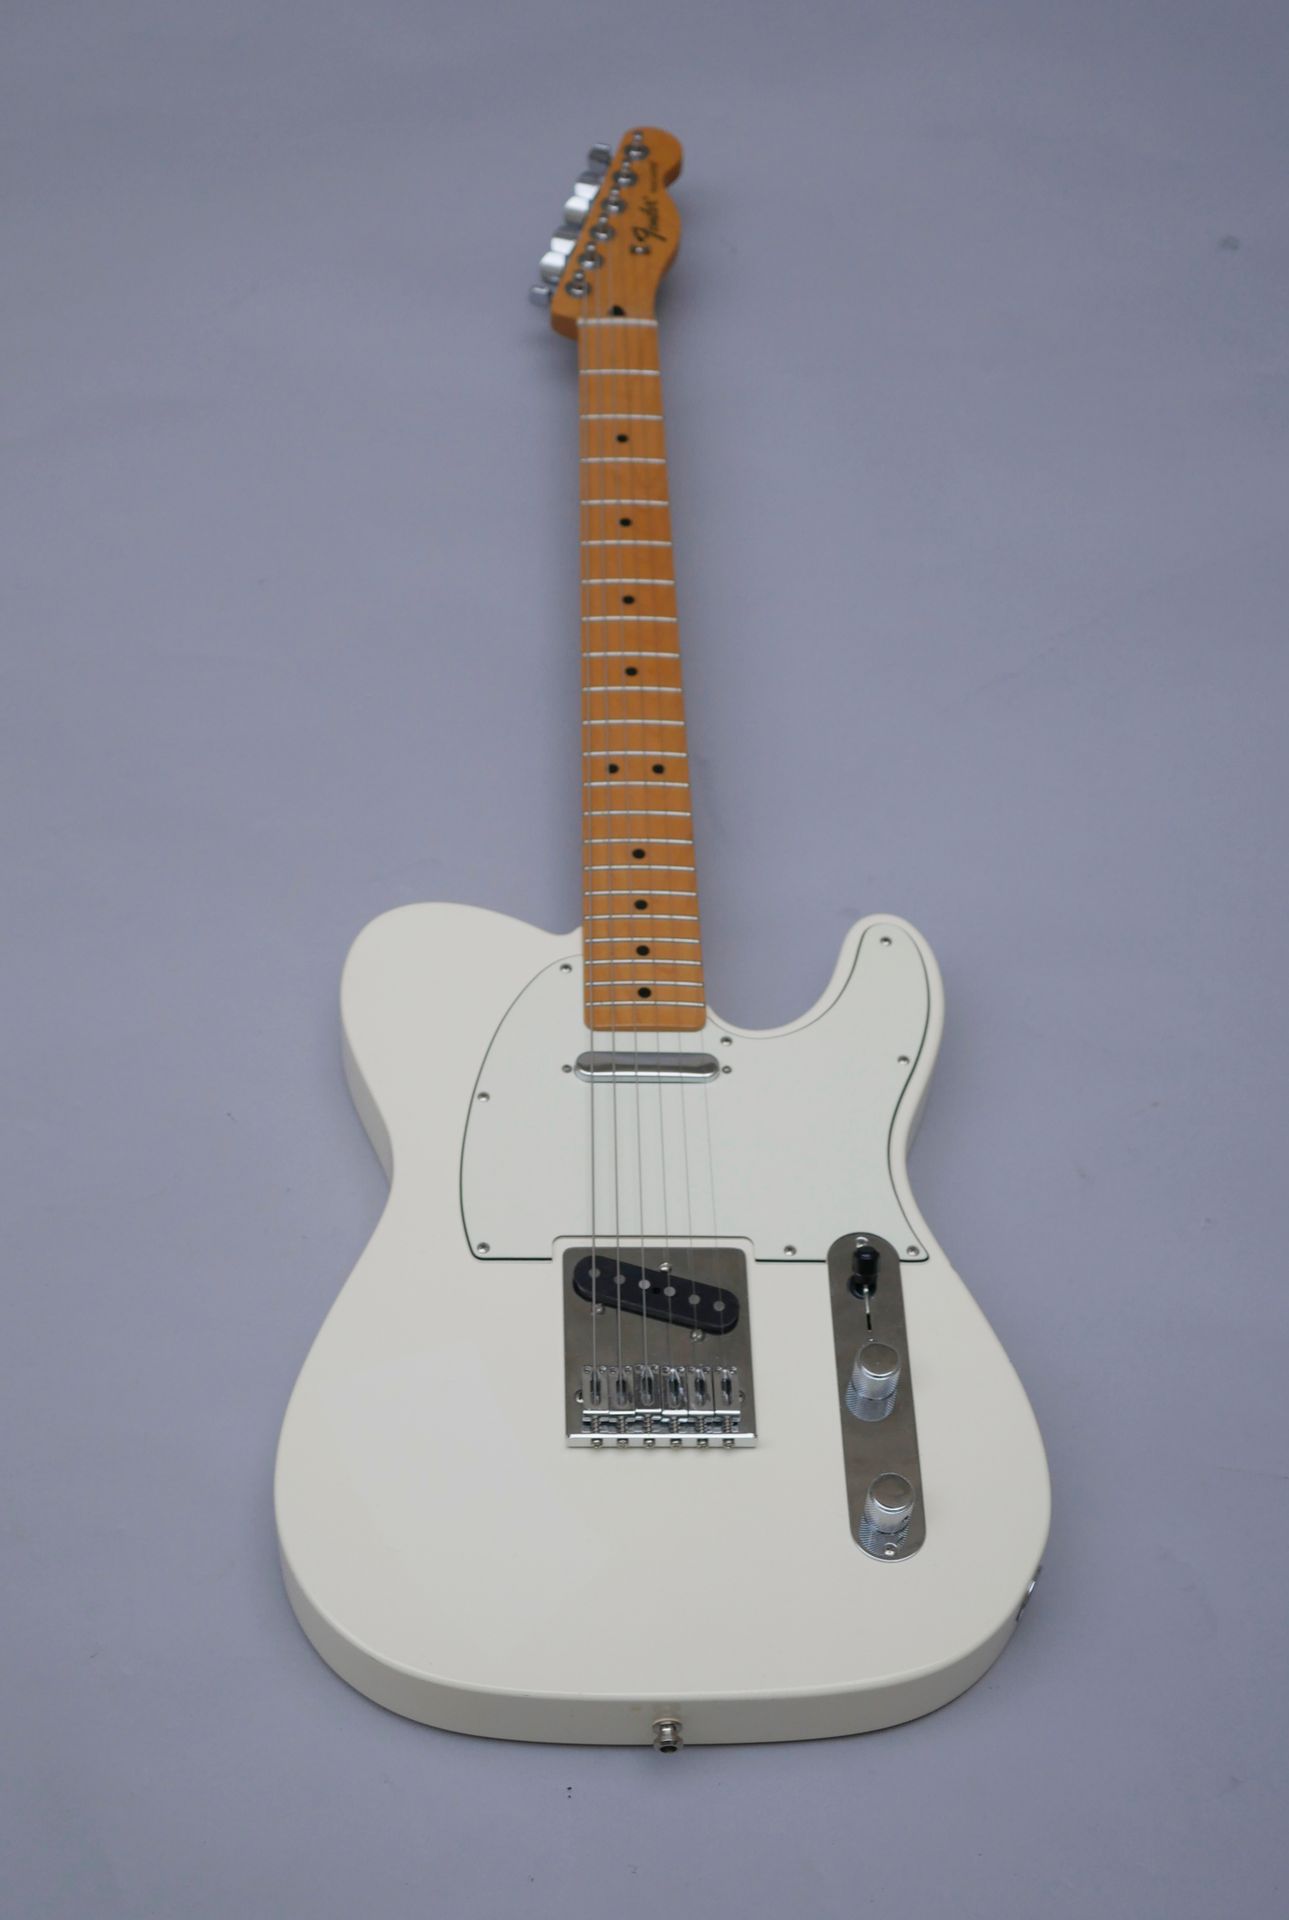 Null Fender Solidbody电吉他，Telecaster型号，墨西哥制造，奥林匹克白漆。

状况良好，清漆有破损，箱子。

(经测试的电子产品)